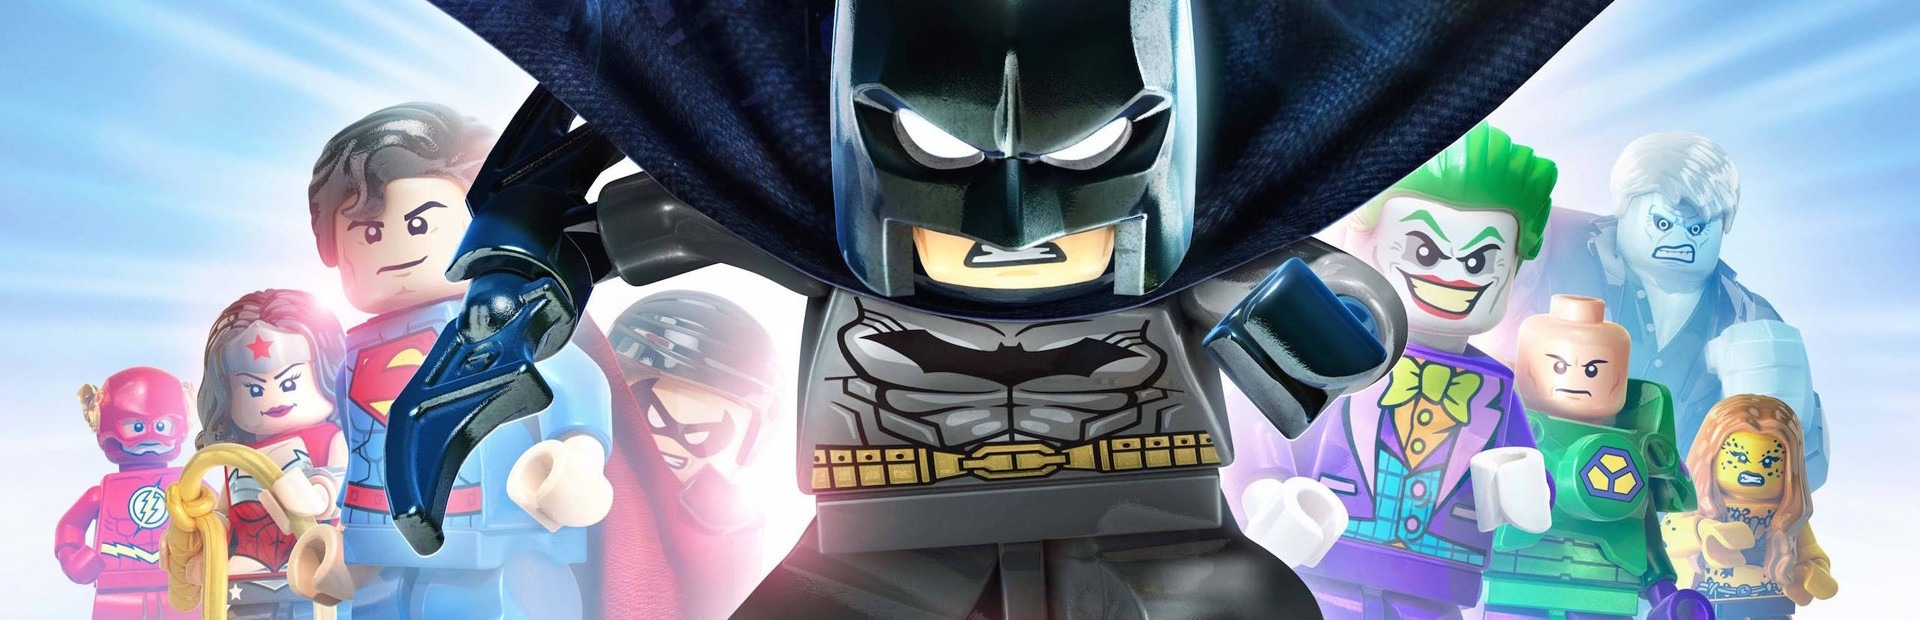 Banner Lego Batman 3: Beyond Gotham Premium Edition